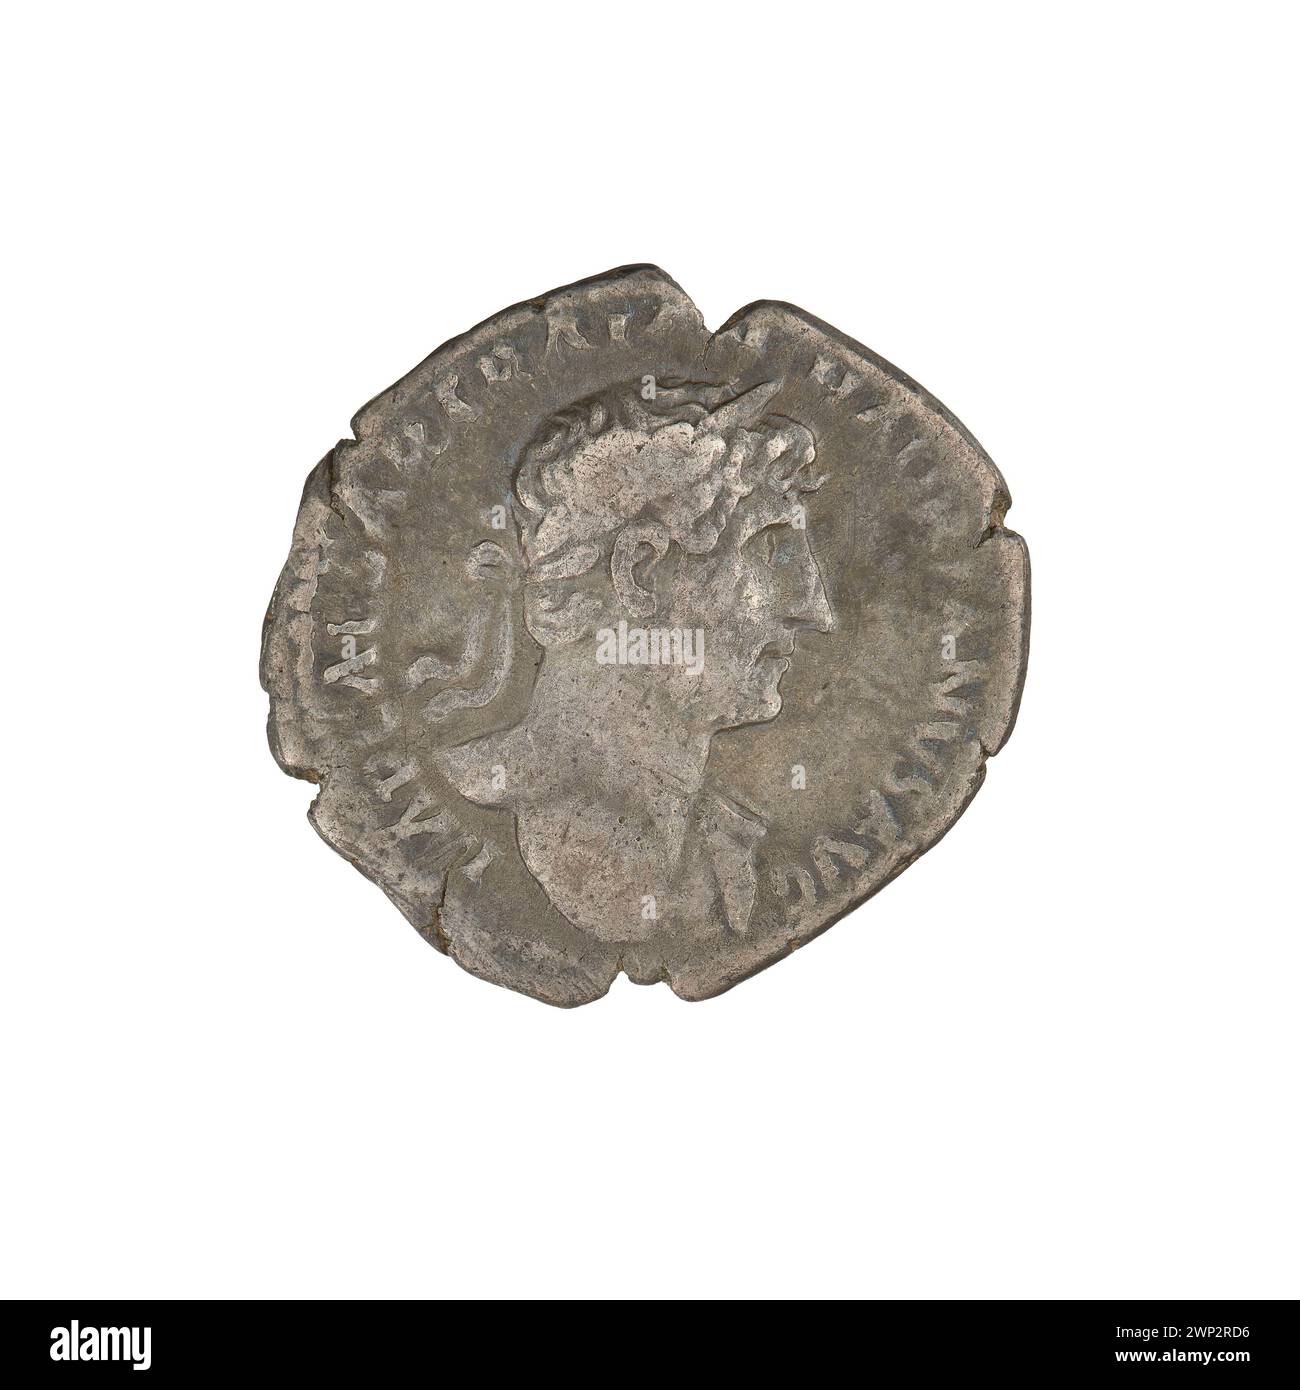 denarius; Hadrian (76-138; Roman emperor 117-138); 119-122 (118-00-00-118-00-00);Fortuna (personification), bust, abundance horns, reins, laurel wreaths Stock Photo